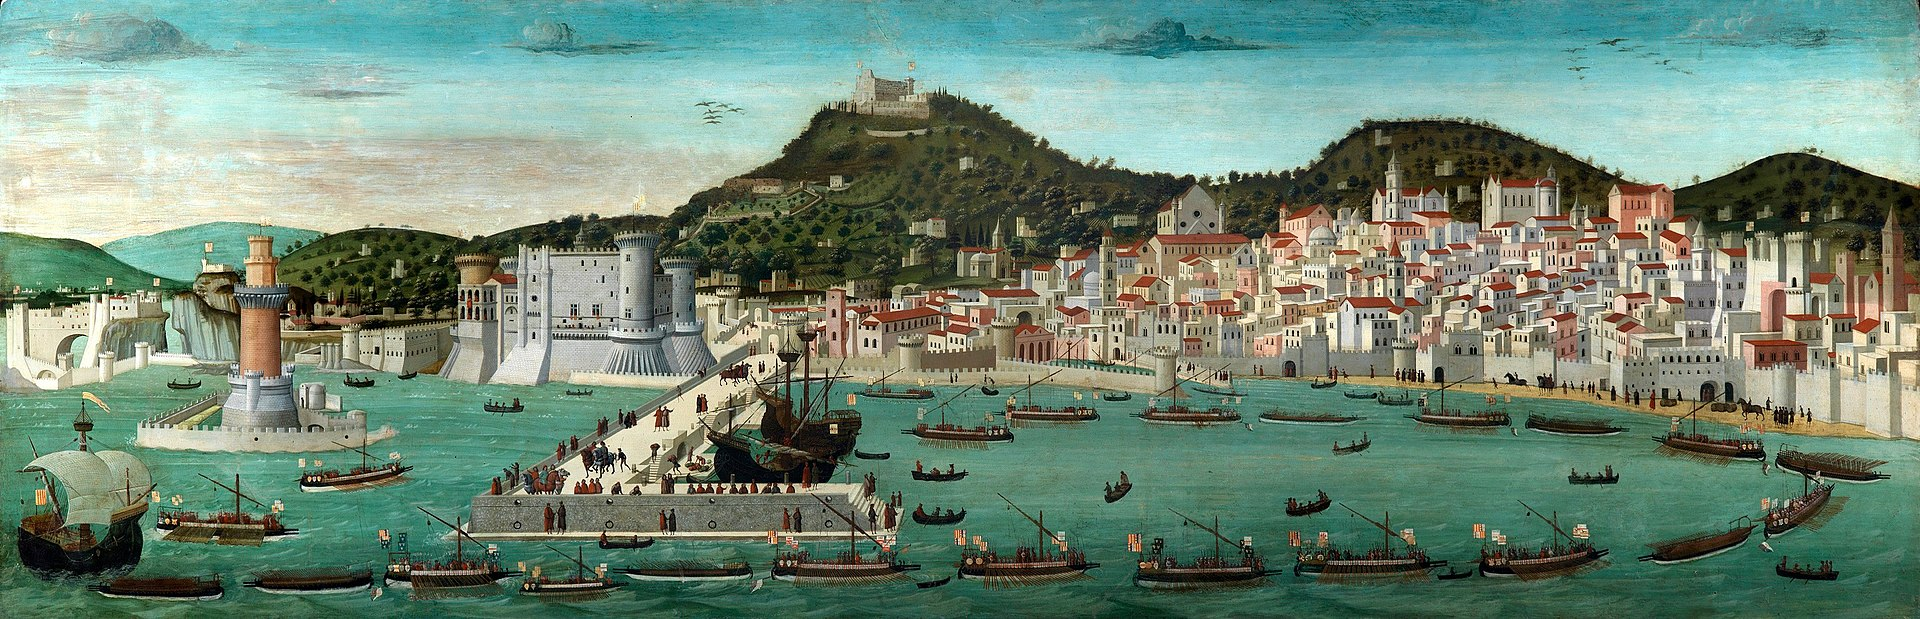 Vista de Nápoles. Tavola Strozzi (siglo XV). Fuente Museo Nazionale San Martino. Nápoles